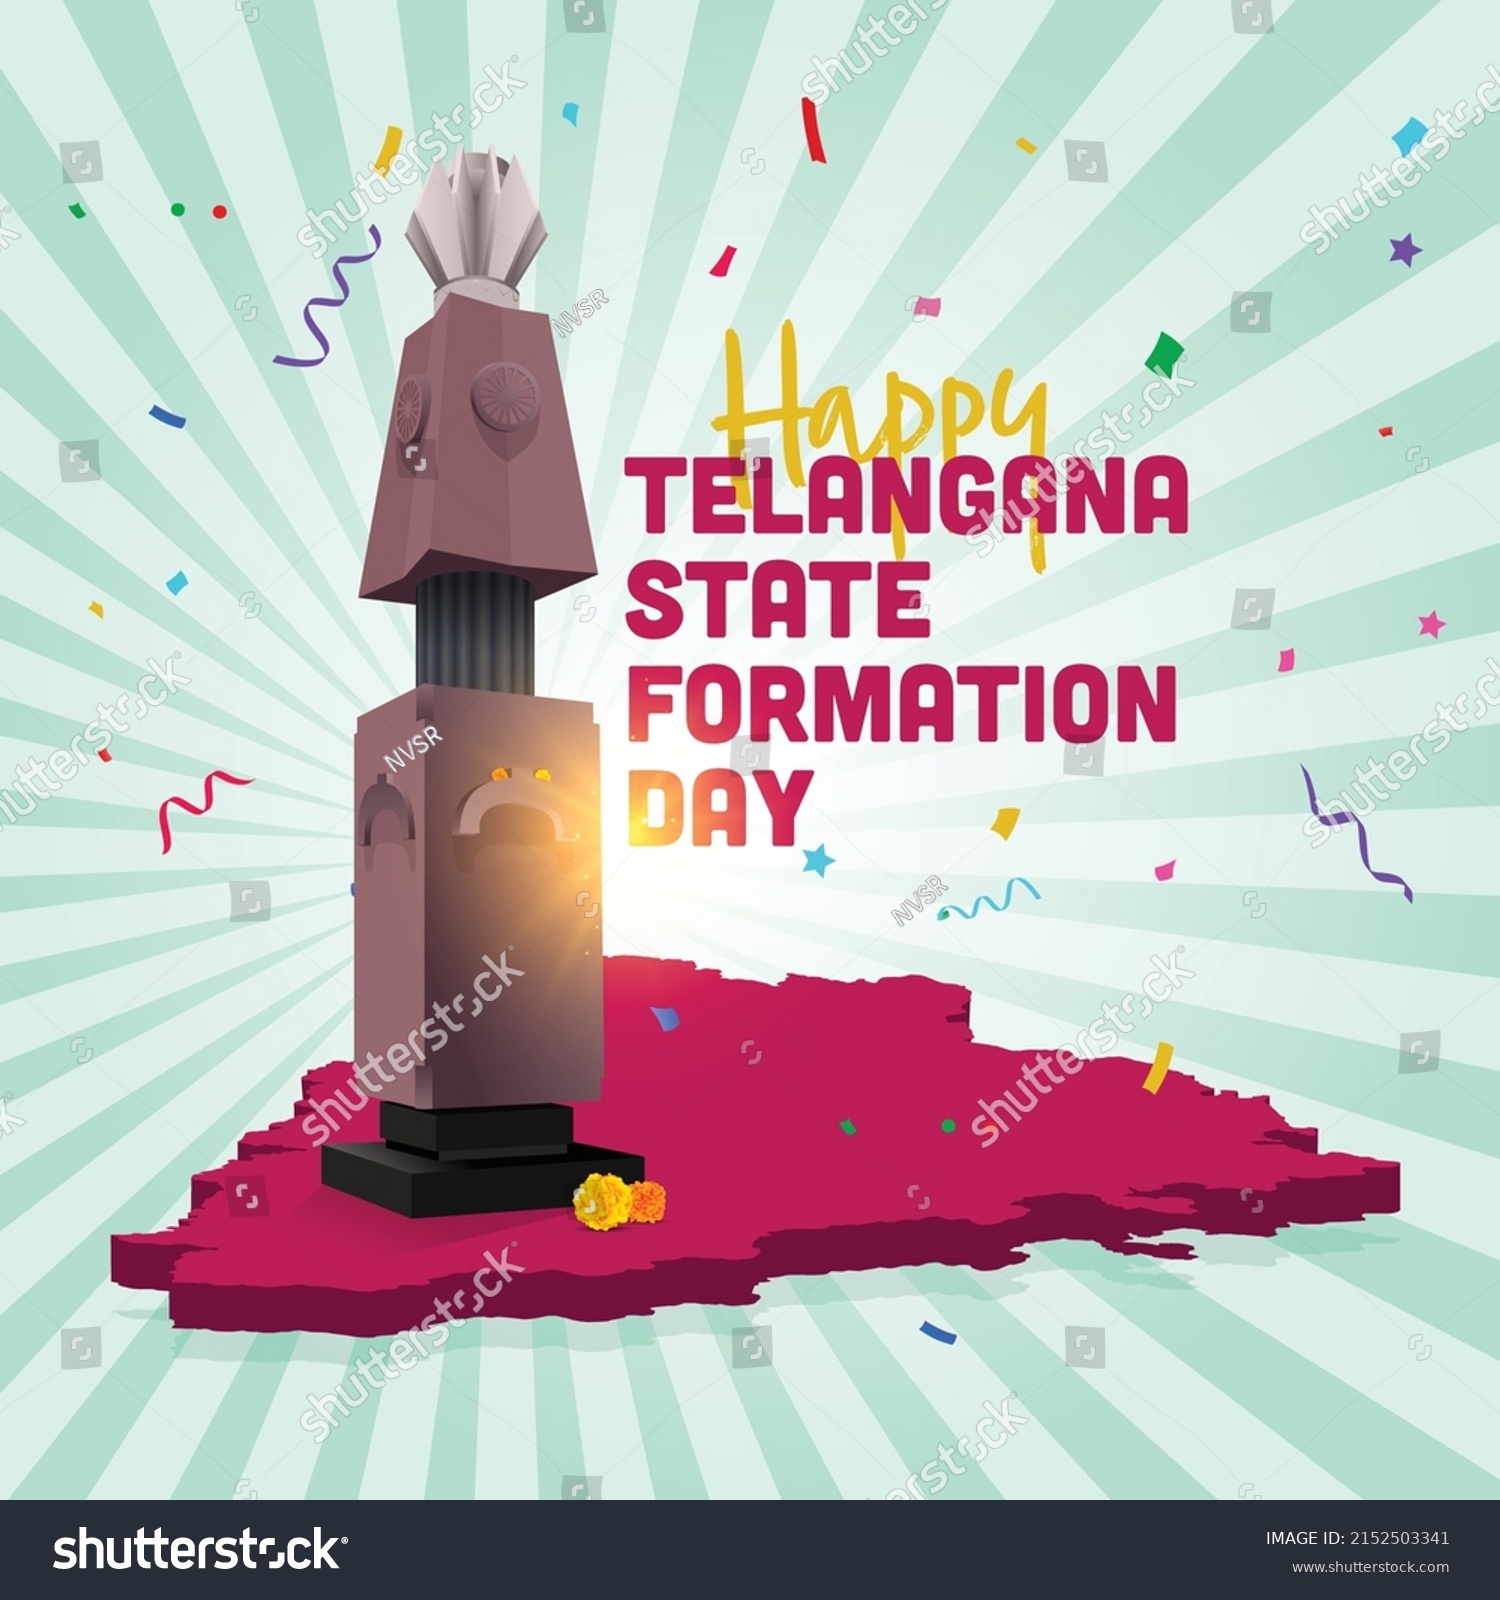 Telangana state formation day celebration confetti around #2152503341